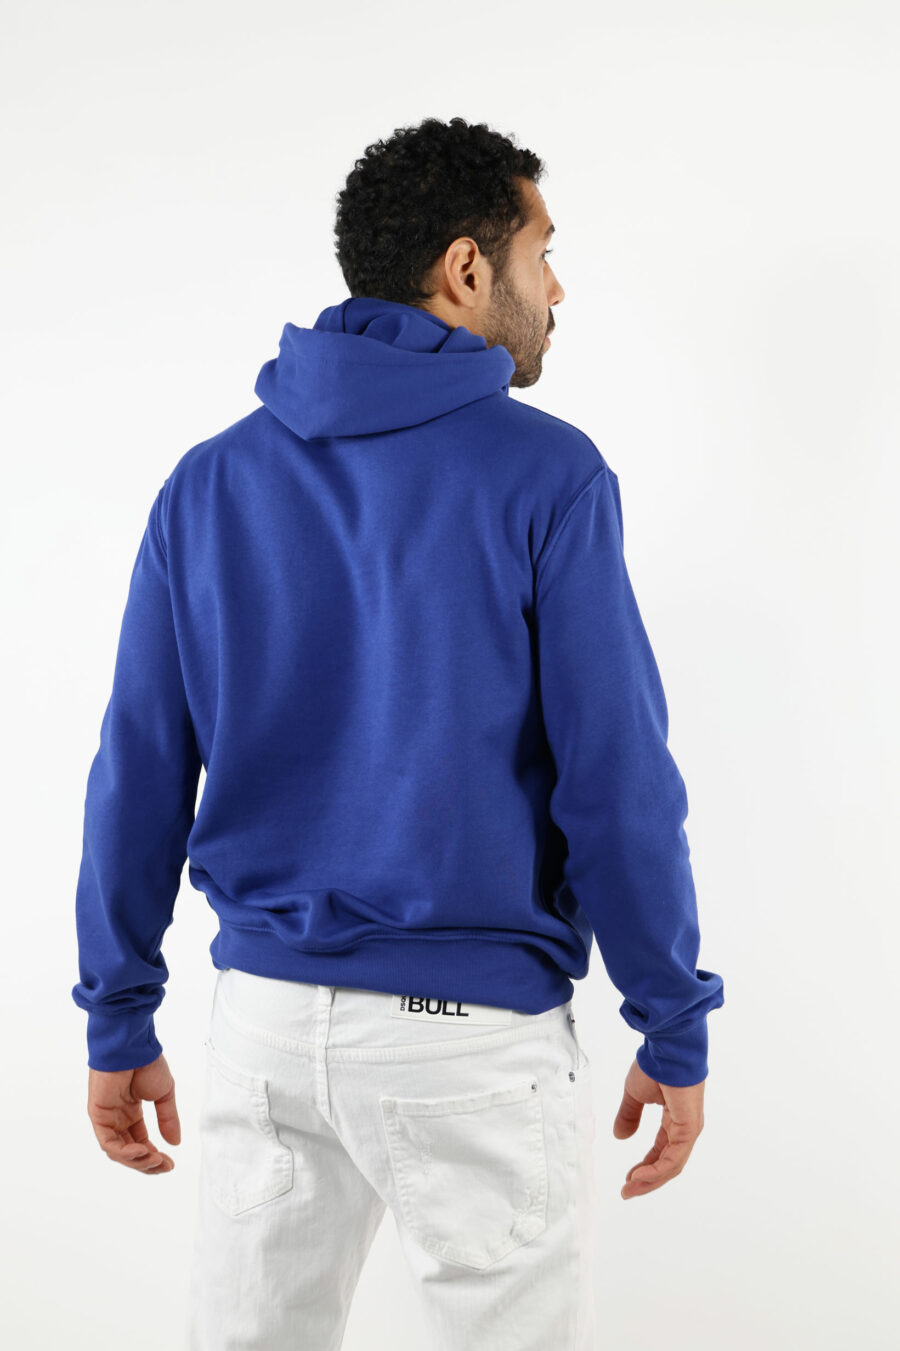 Dark blue hooded sweatshirt with maxilogue "polo bear" - 111249